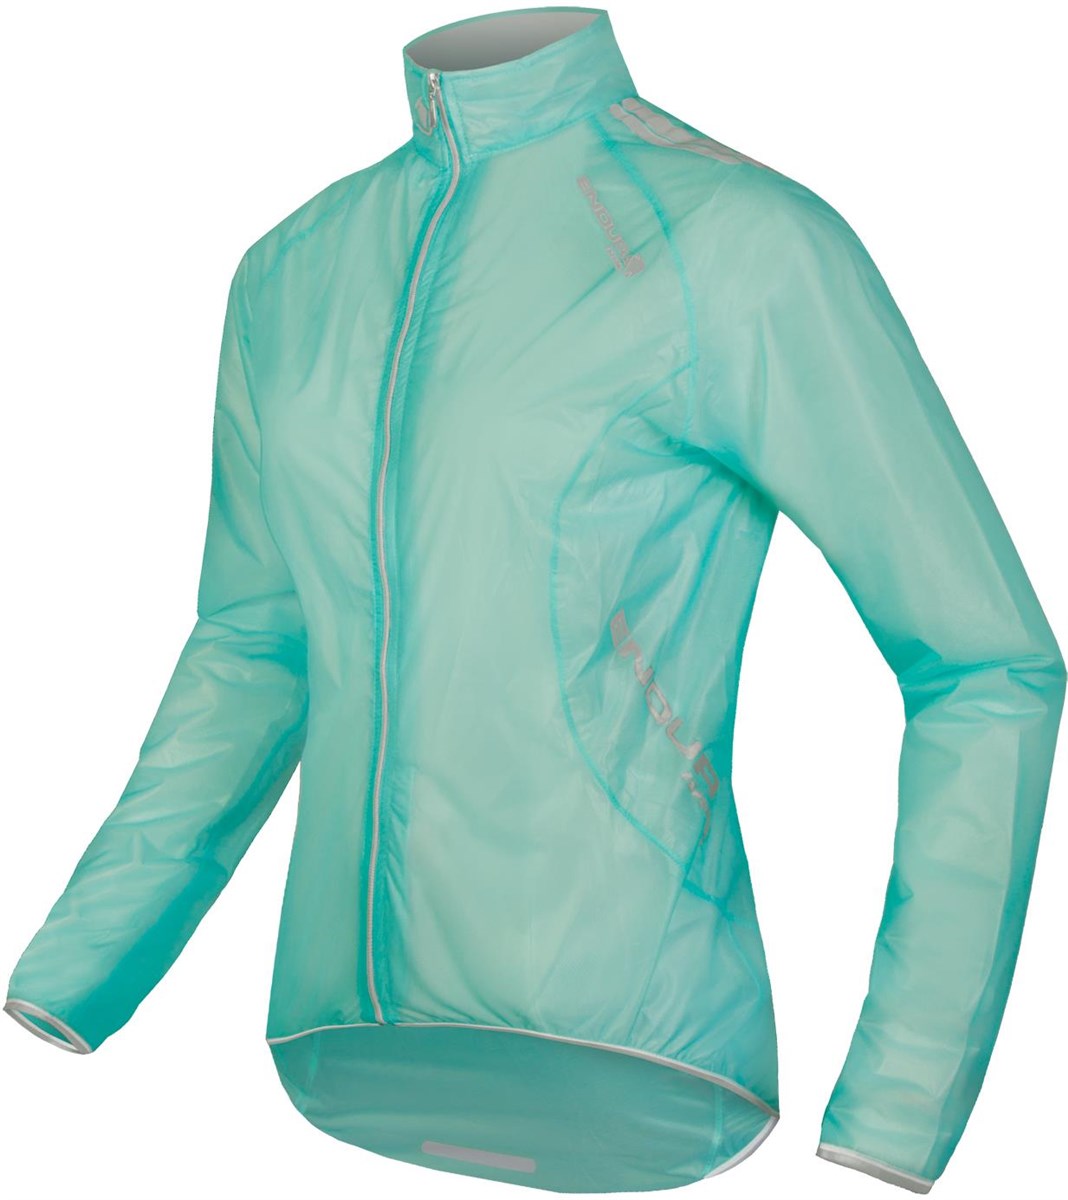 Endura FS260 Pro Adrenaline Race Cape Womens Windproof Cycling Jacket